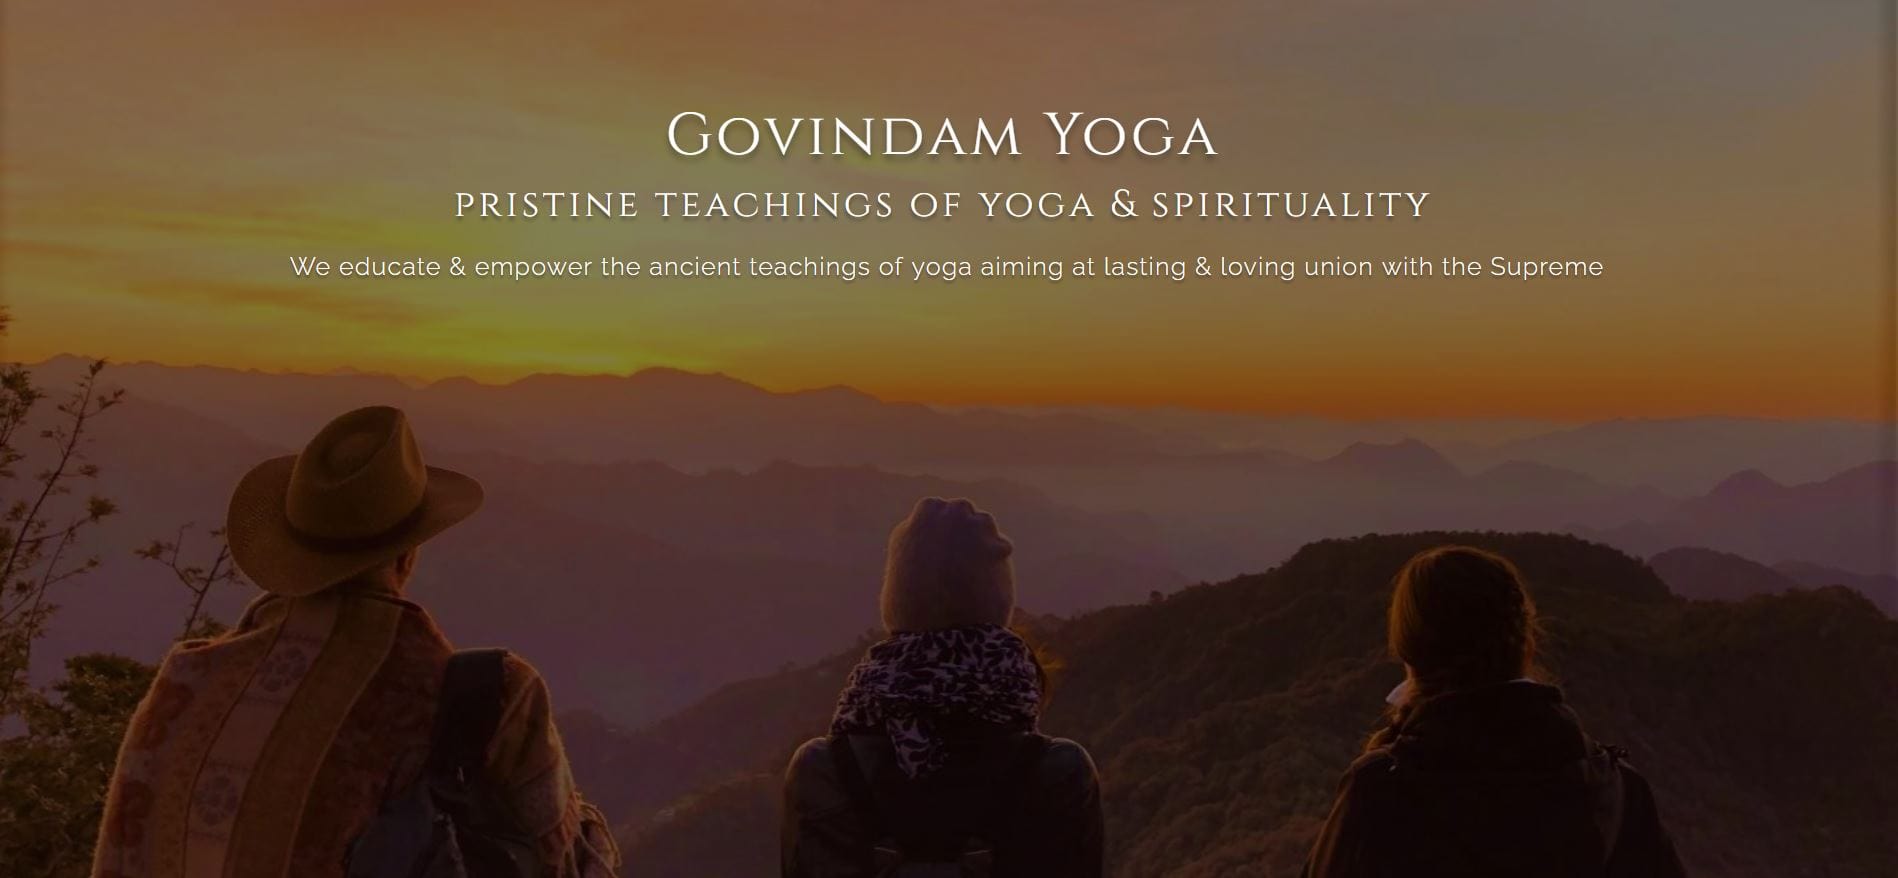 Govindam Yoga - A Yoga School in Rishikesh Uttarakhand India